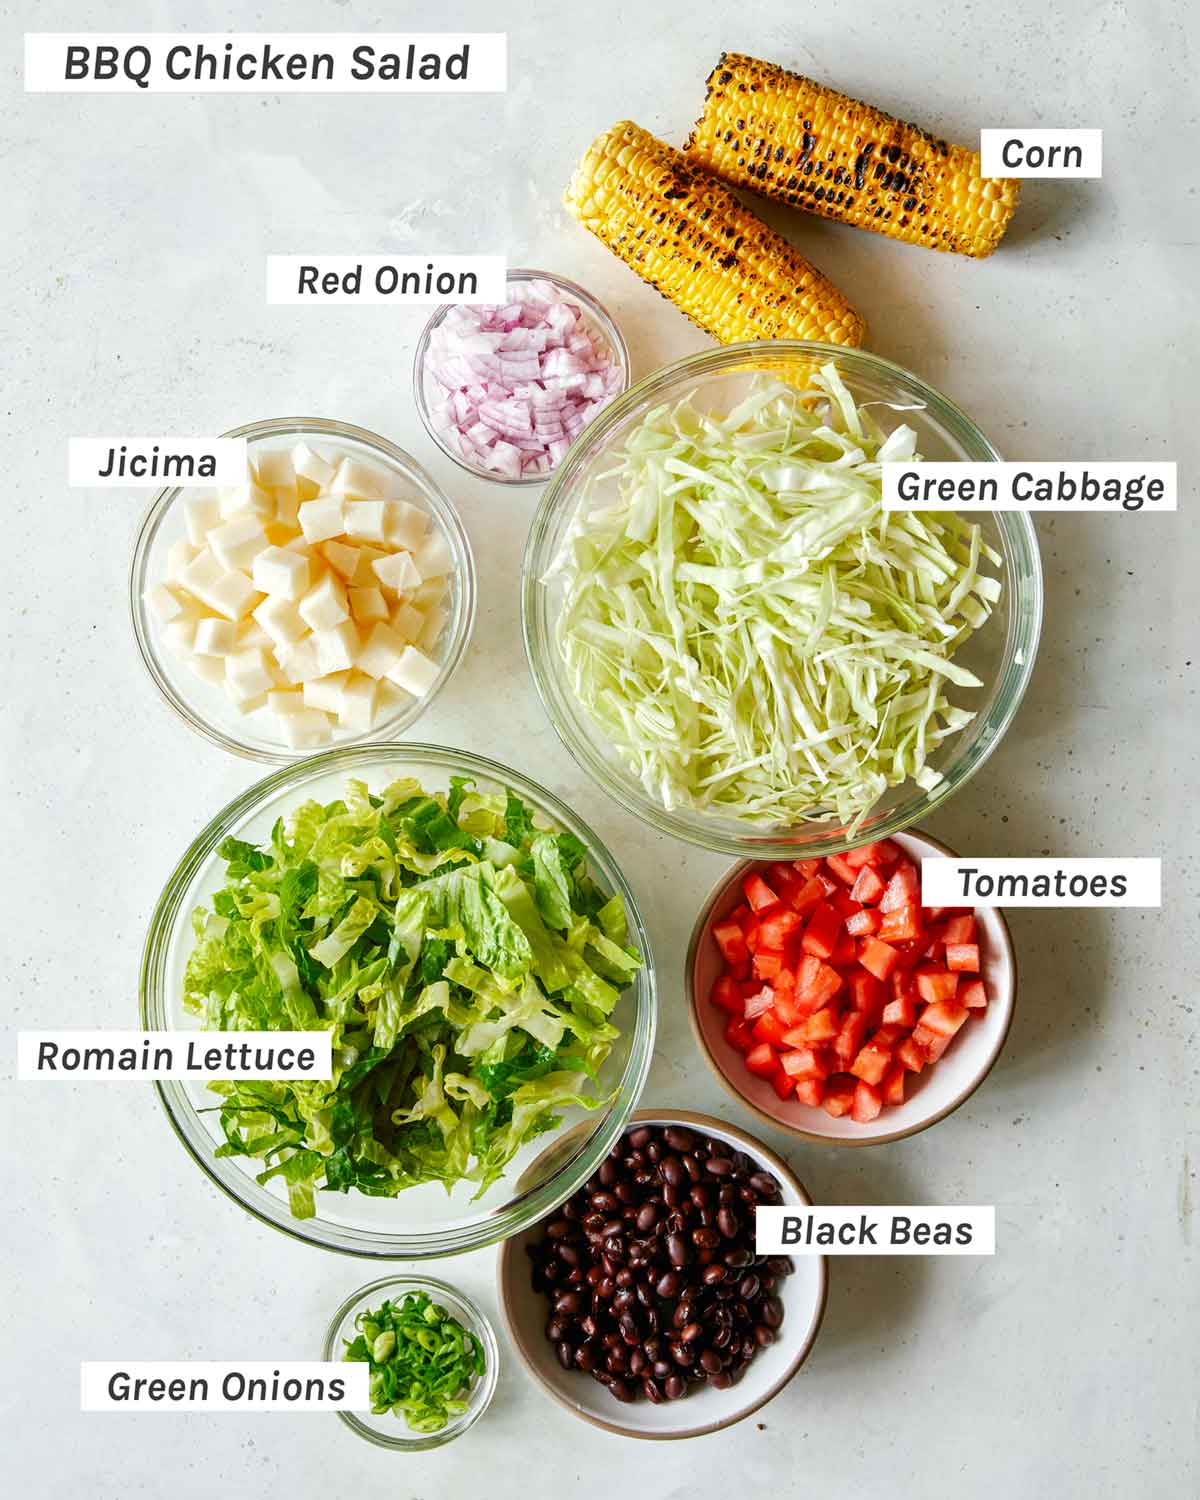 Salad ingredients for a BBQ Chicken Salad